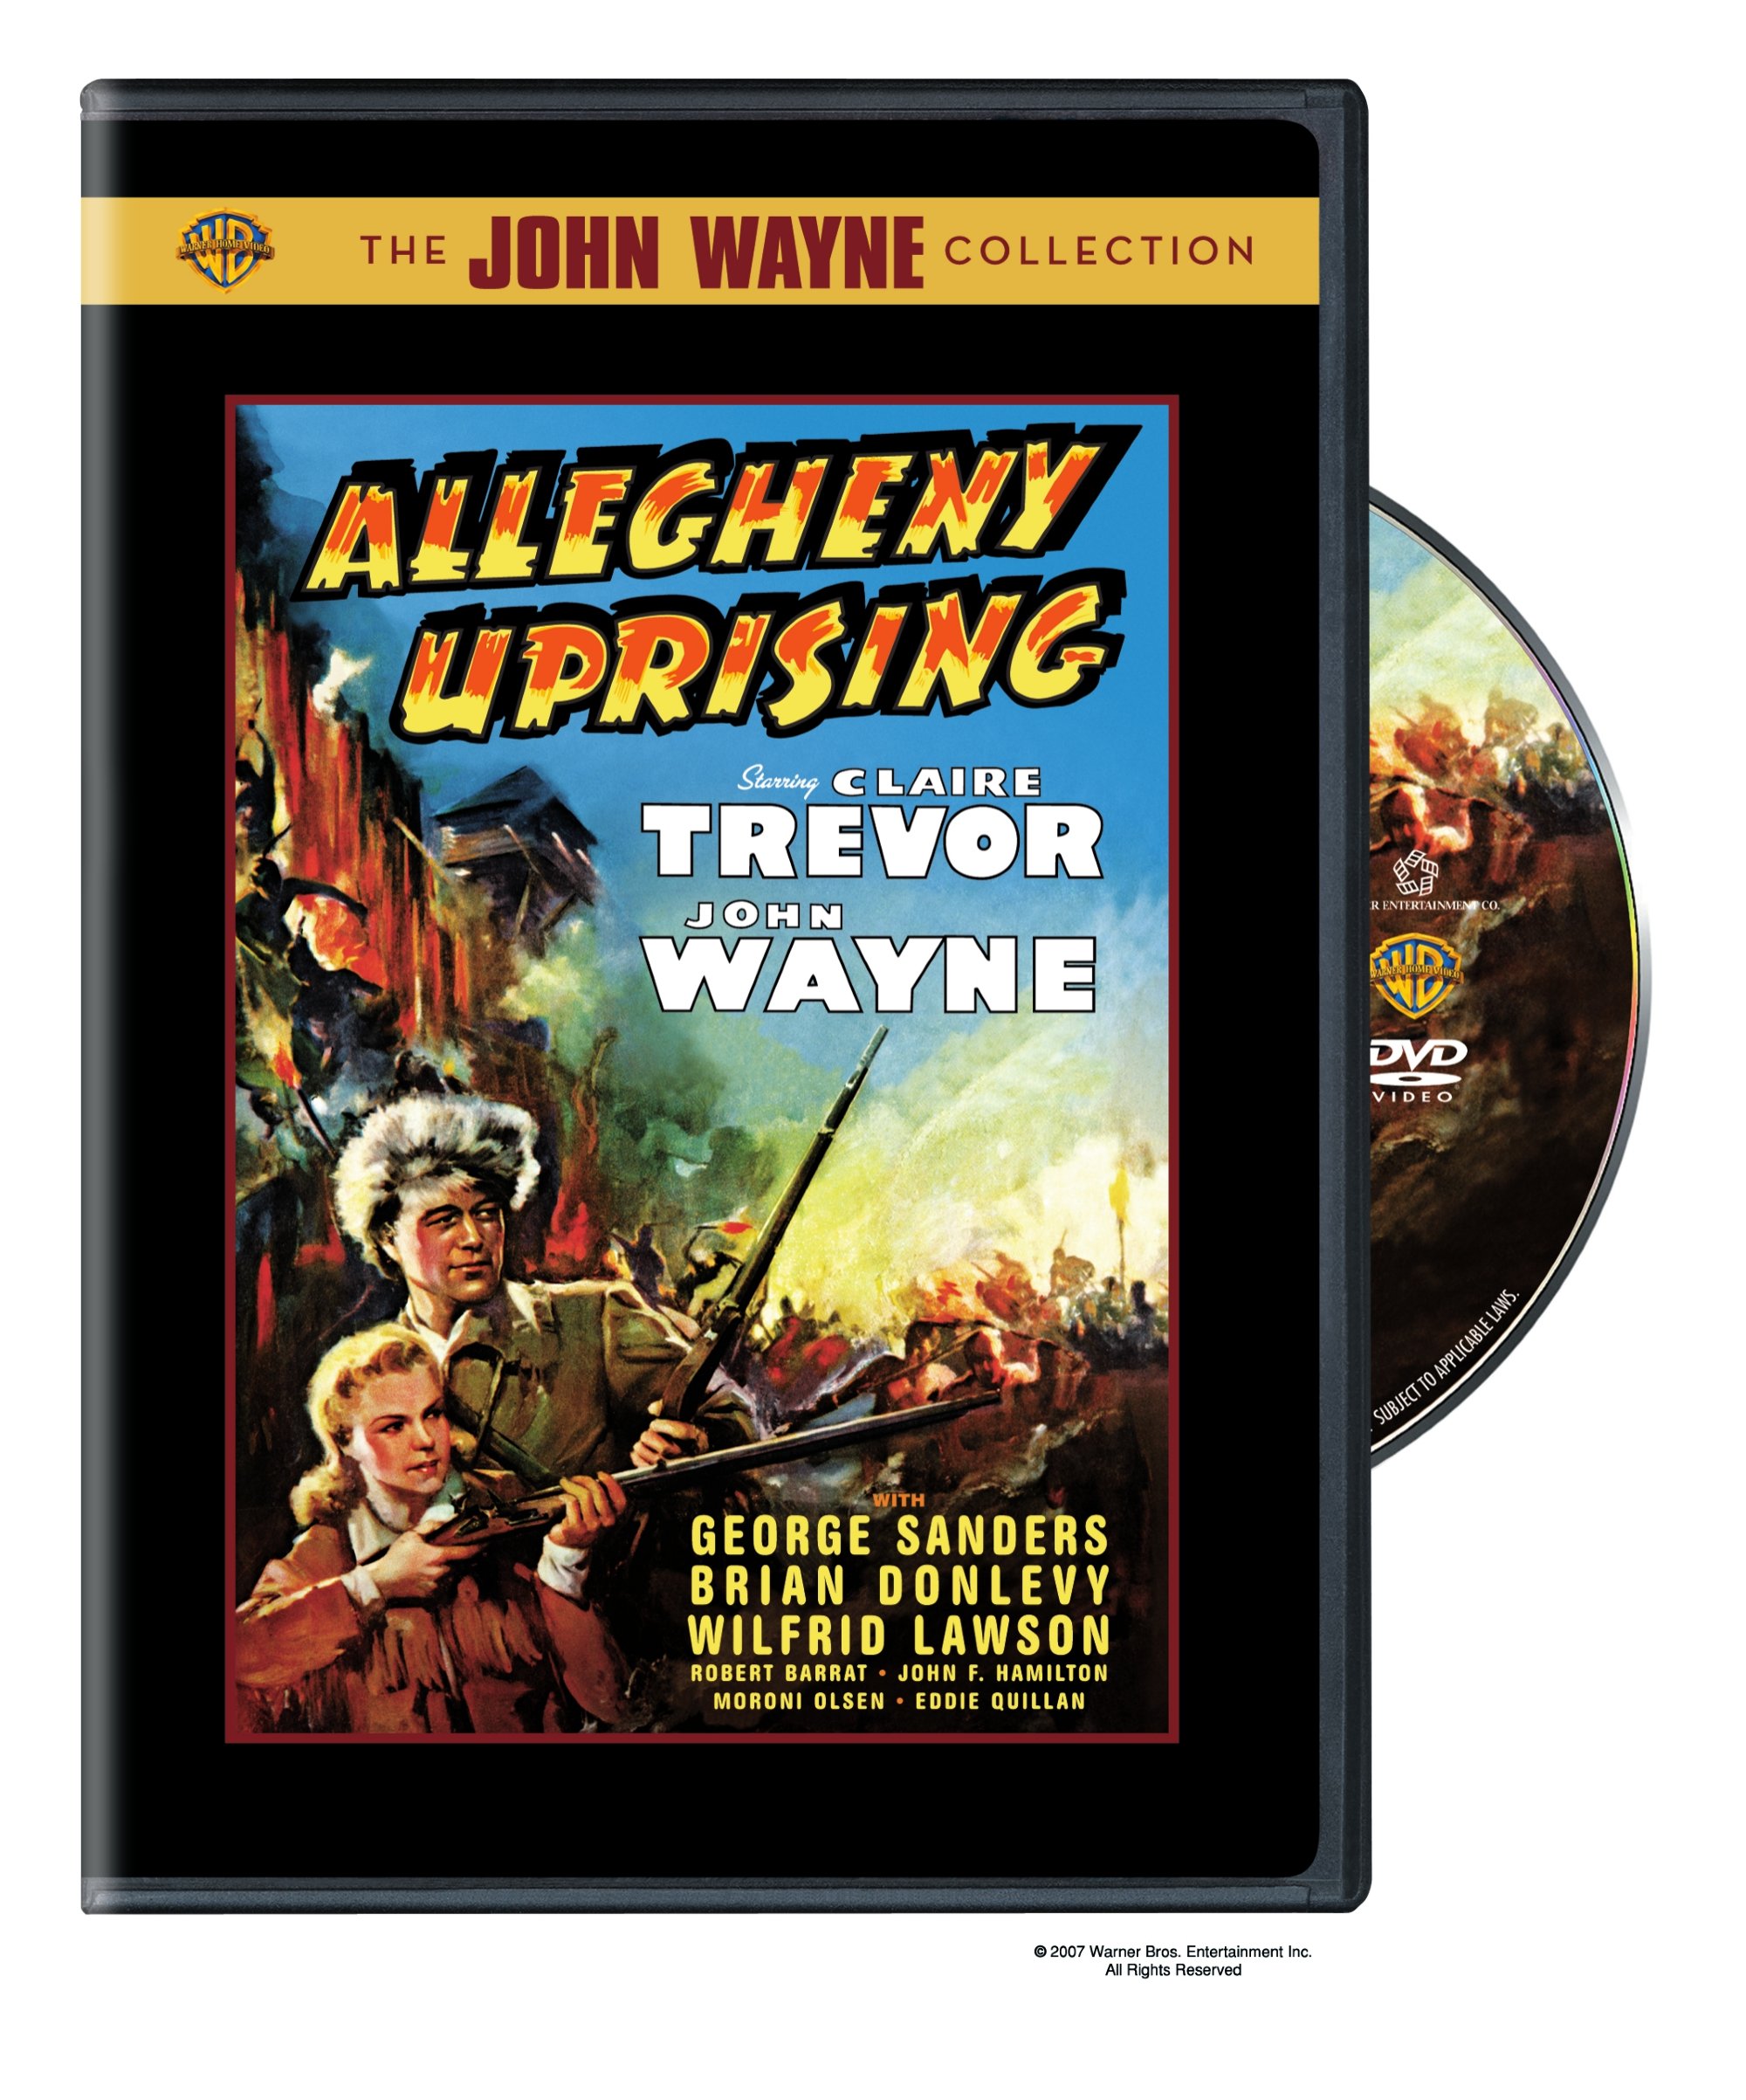 Allegheny Uprising - DVD [ 2012 ]  - War Movies On DVD - Movies On GRUV